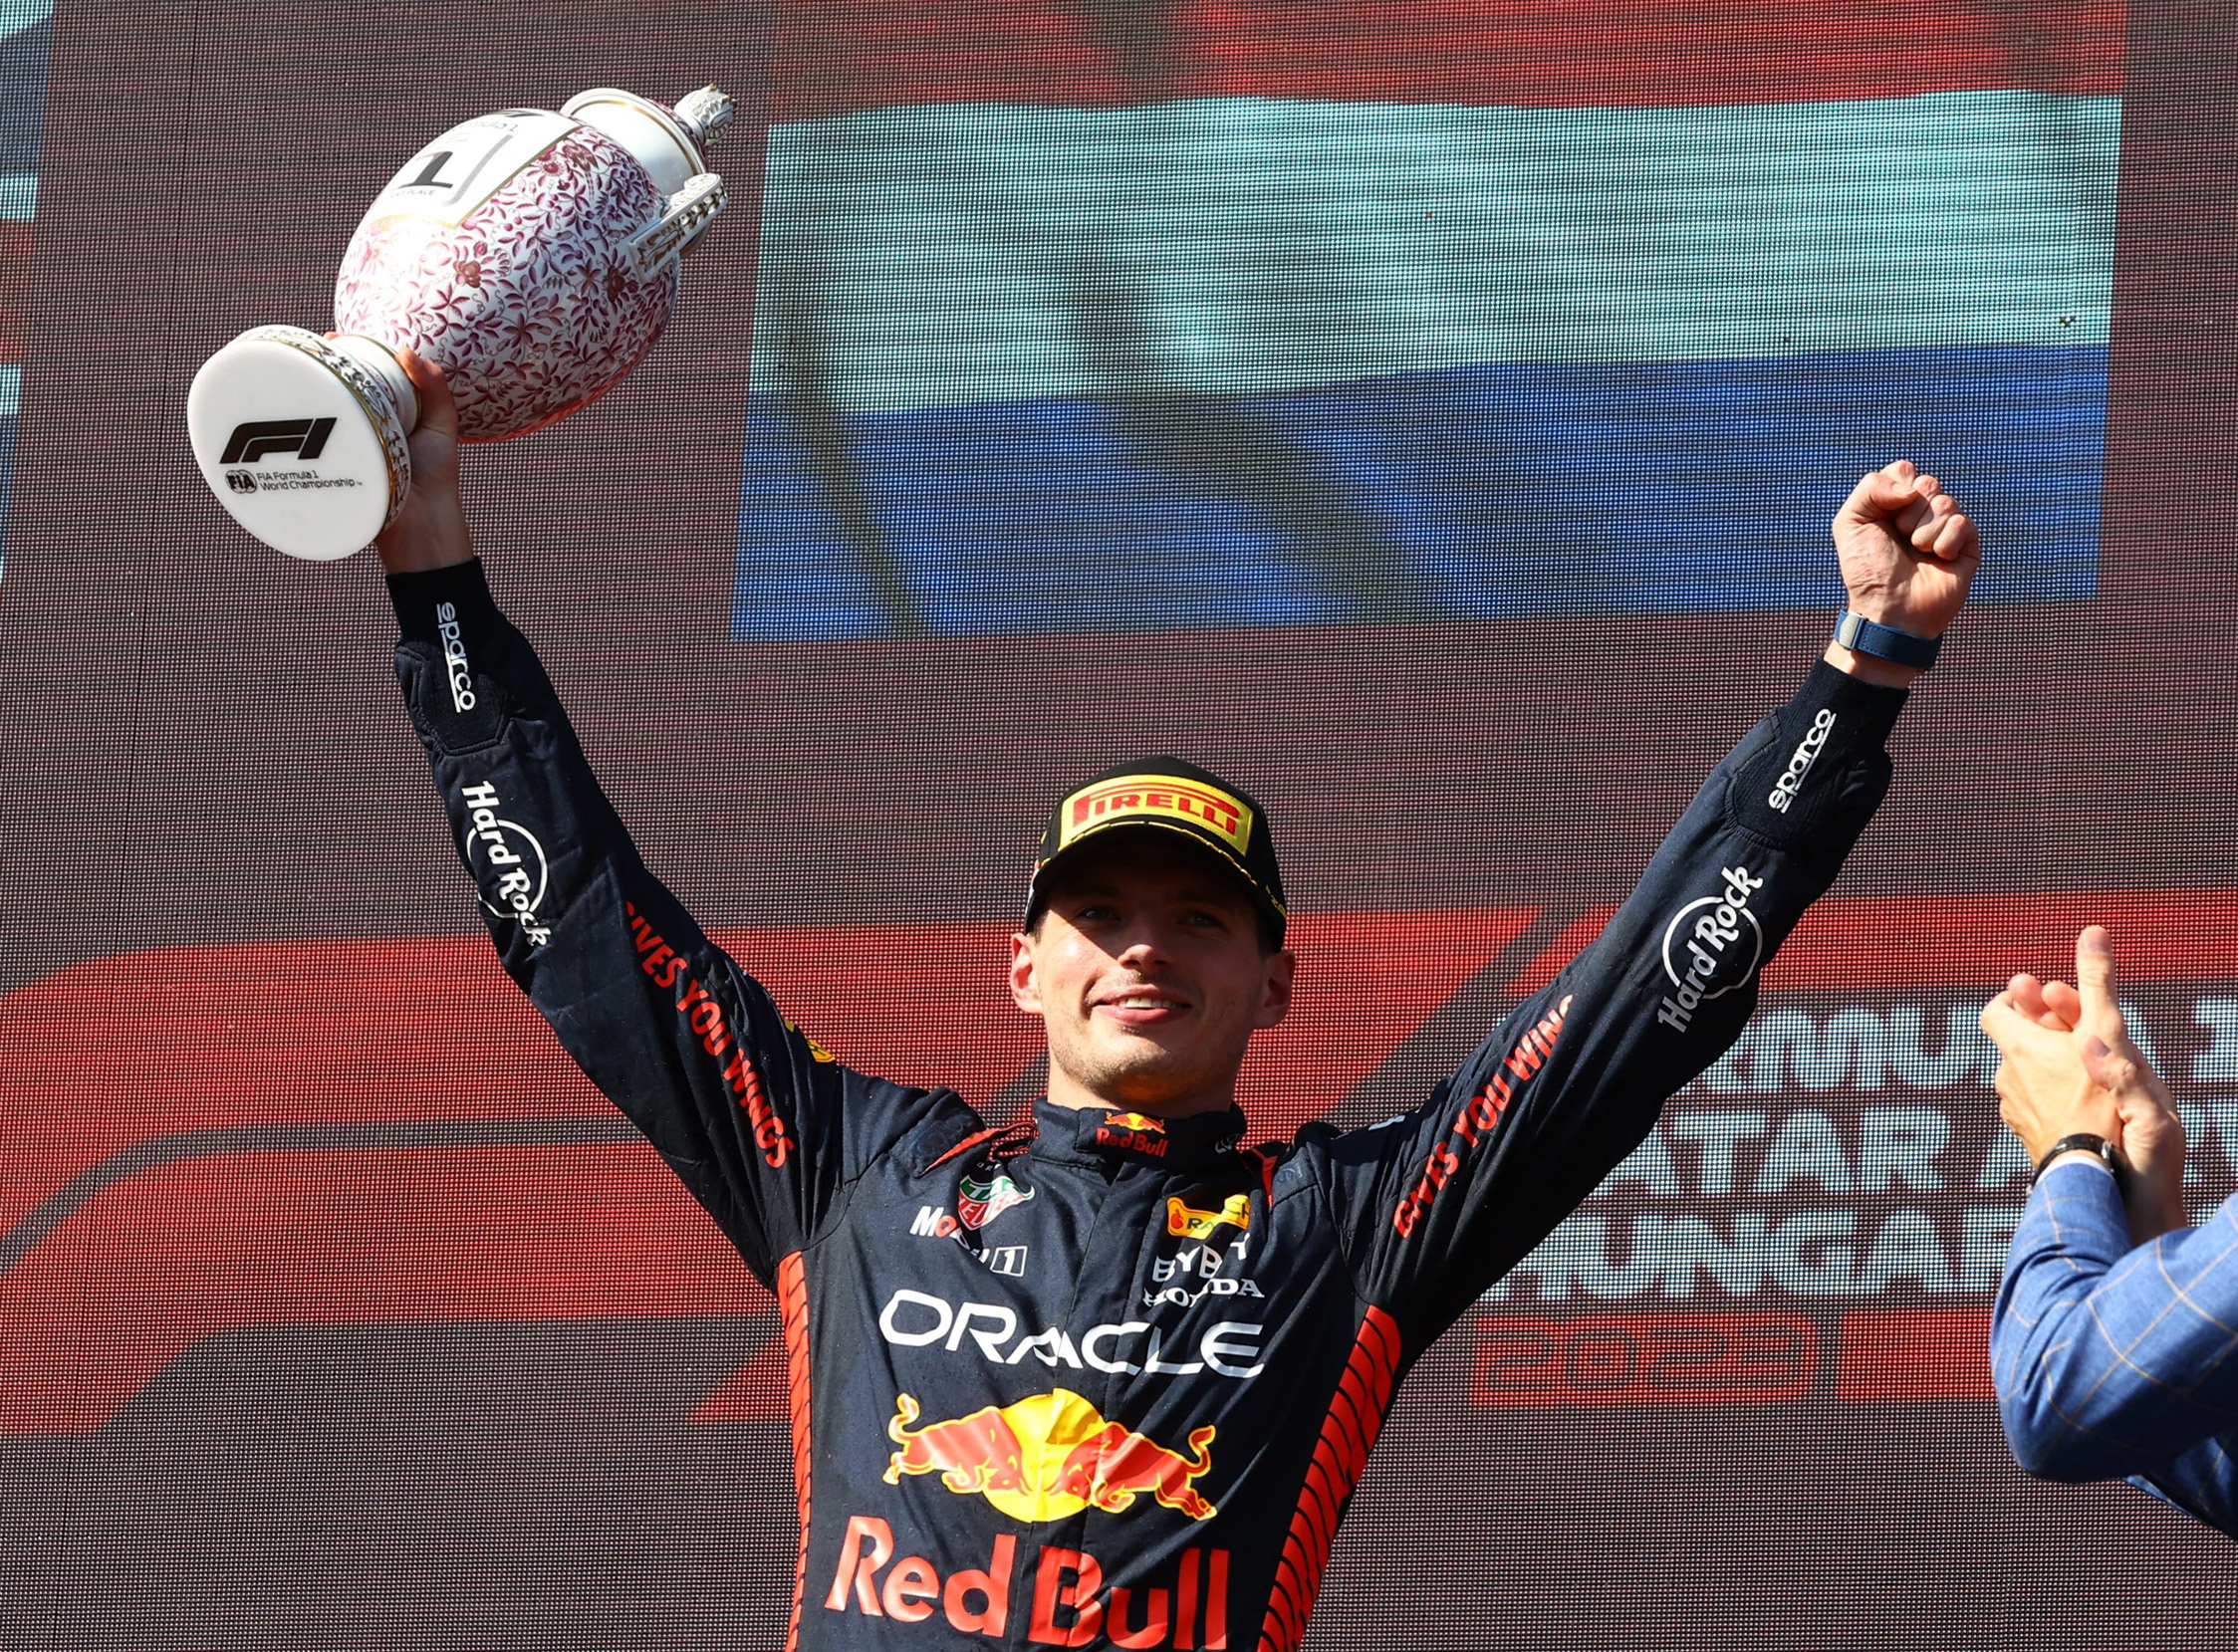 Verstappen wins in Hungary as Red Bull make F1 history